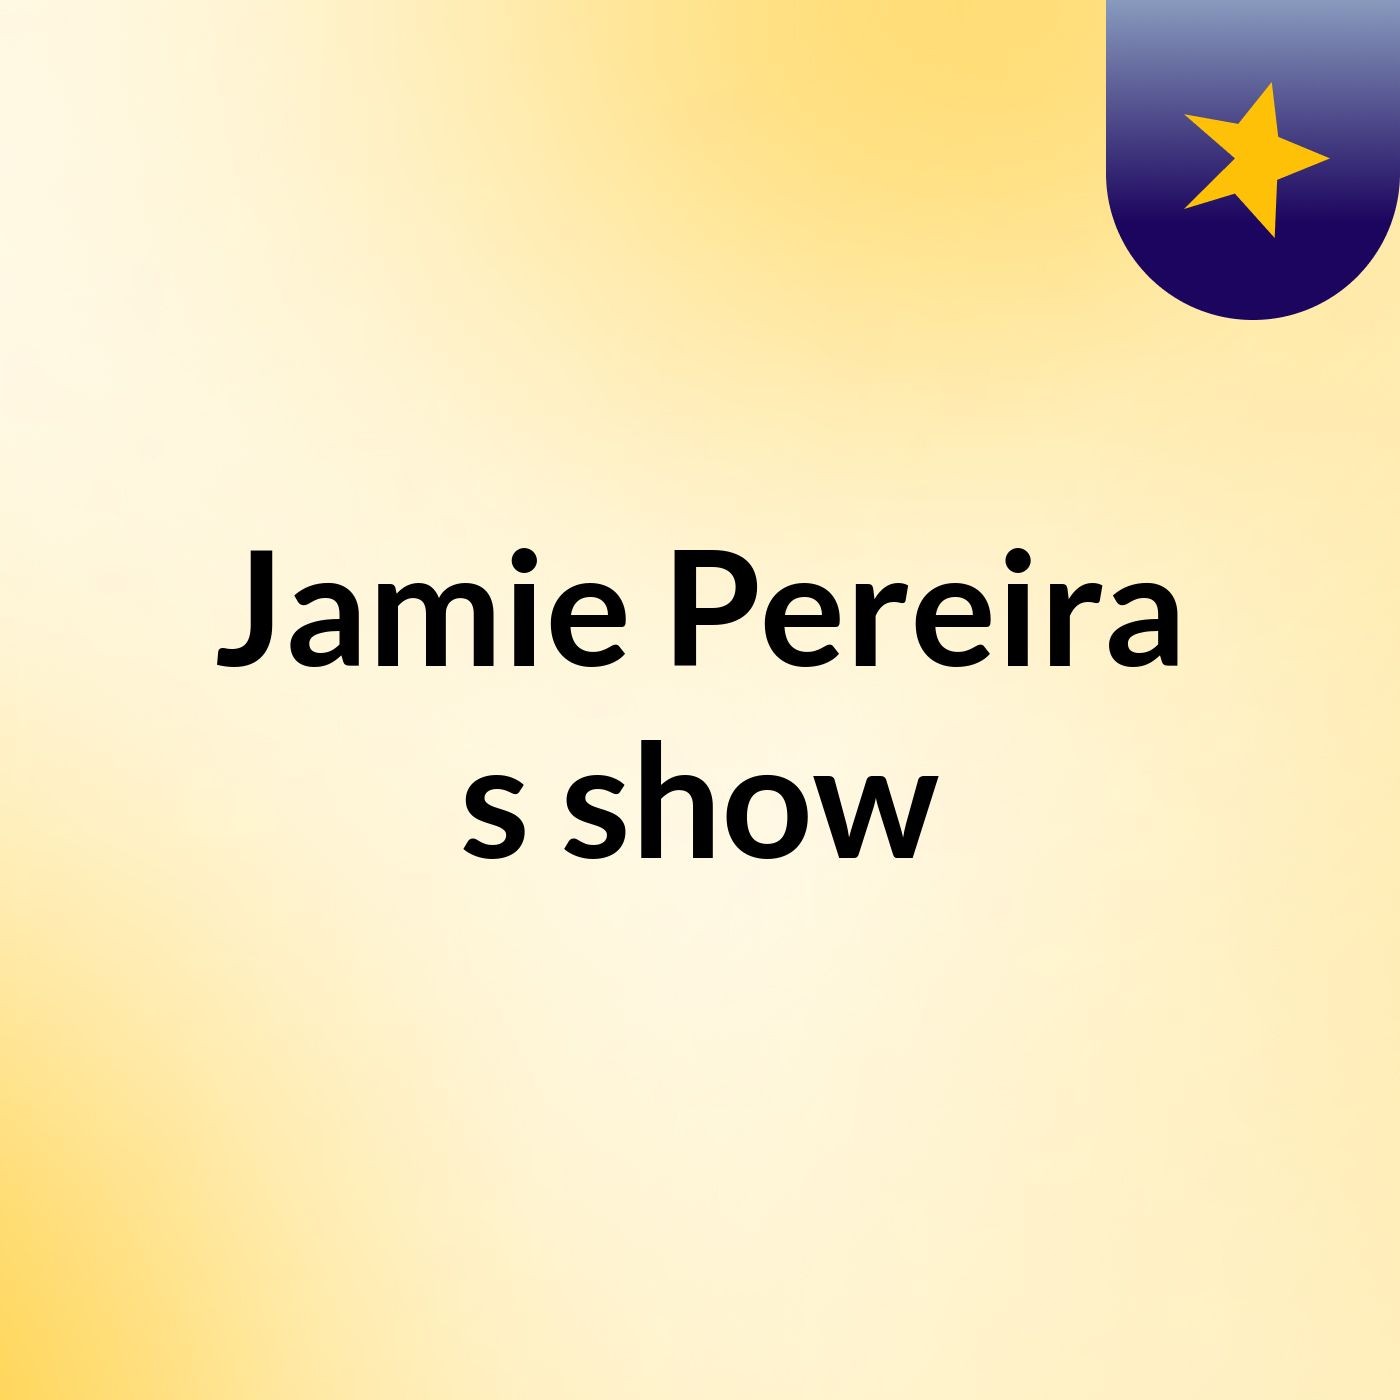 Jamie Pereira's show